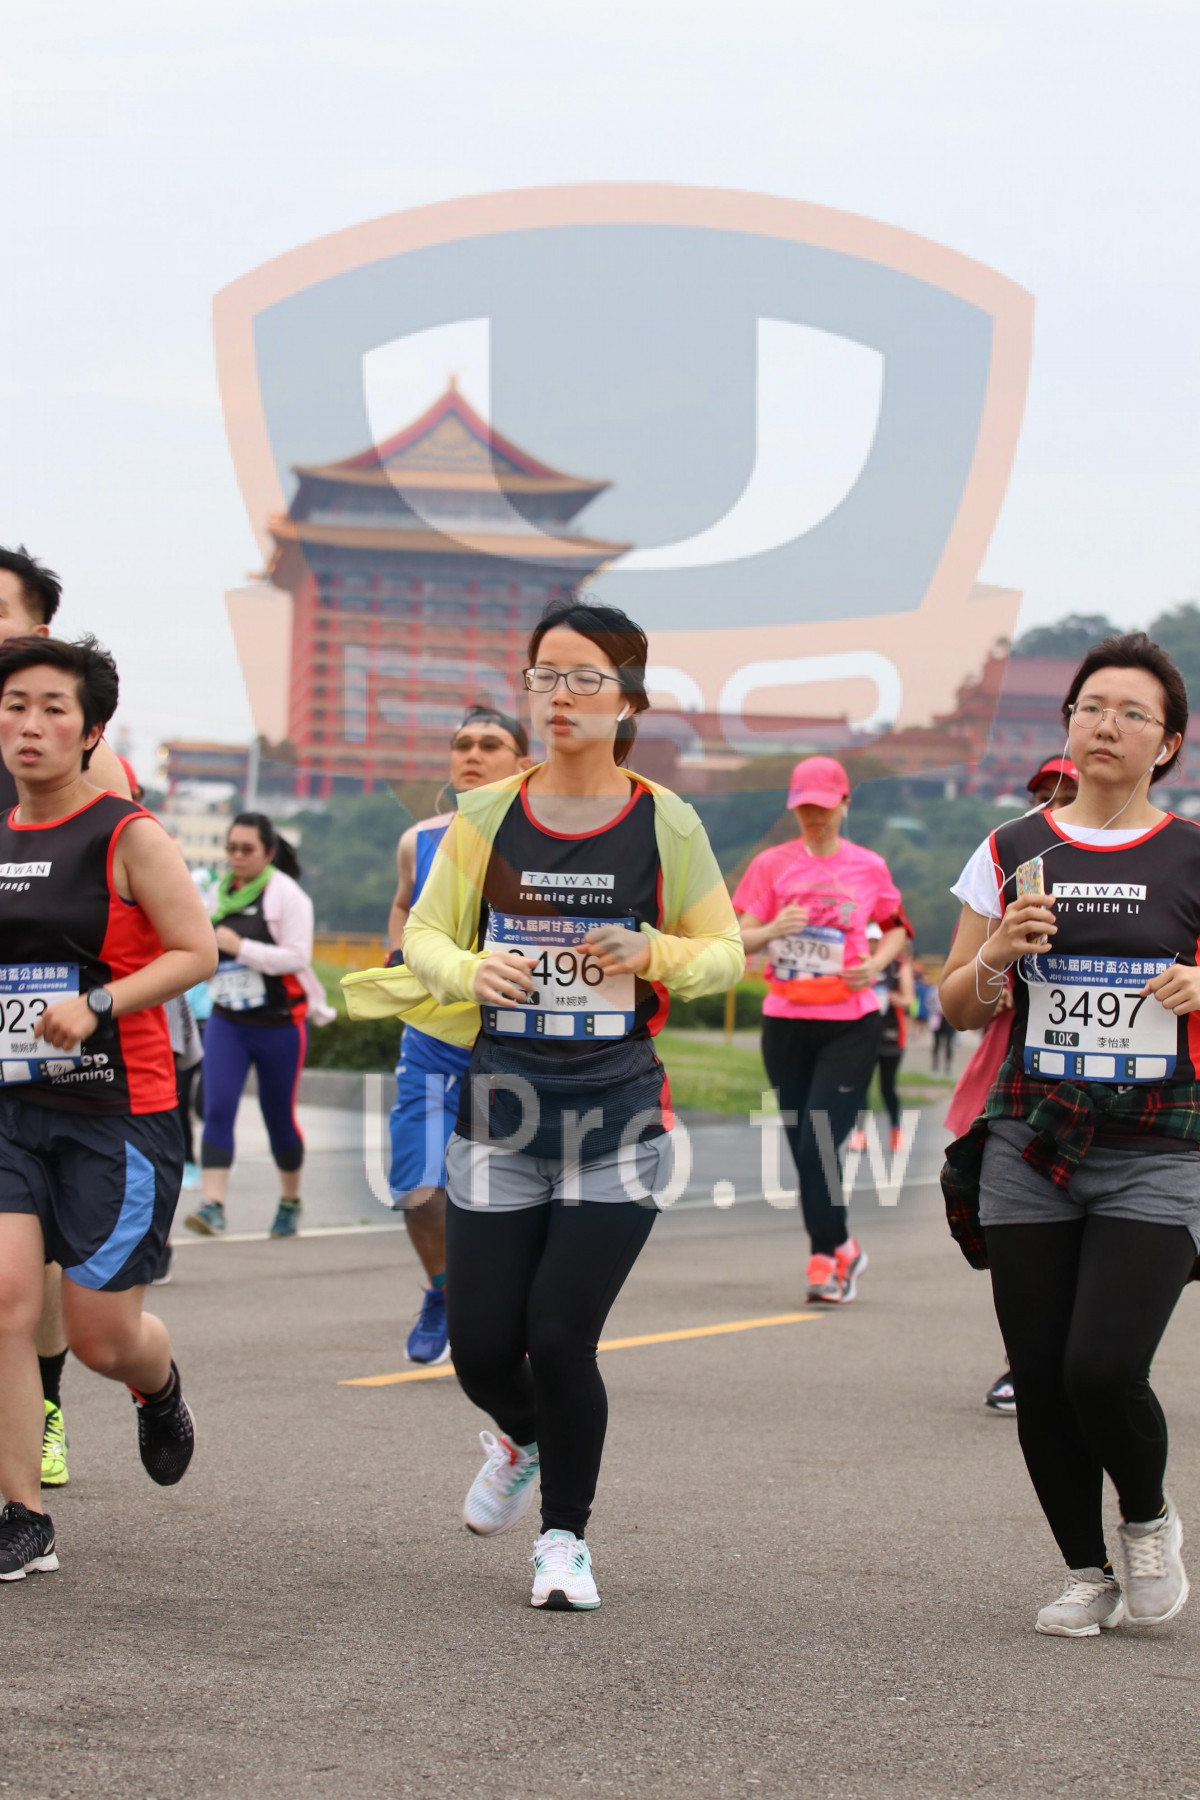 TAIWA N,YI CHIEH LI,ATWAN,running girls,,370,,496,,3497,,10K|2018 第九屆阿甘盃公益路跑|Soryu Asuka Langley